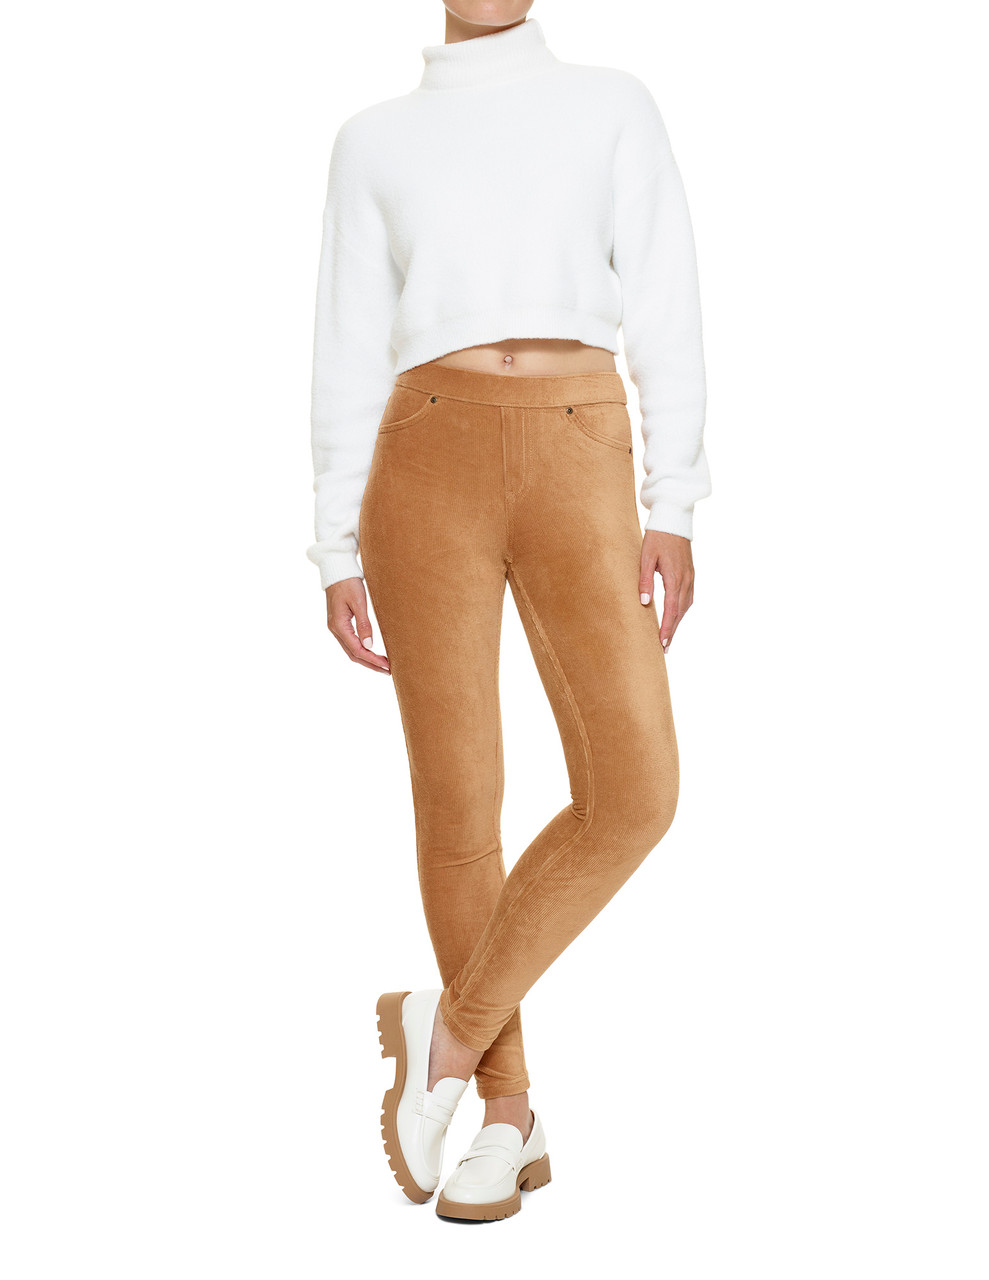 HUE Women's Corduroy Leggings (Straight Leg, X-Large, Camel Brown) at   Women's Clothing store